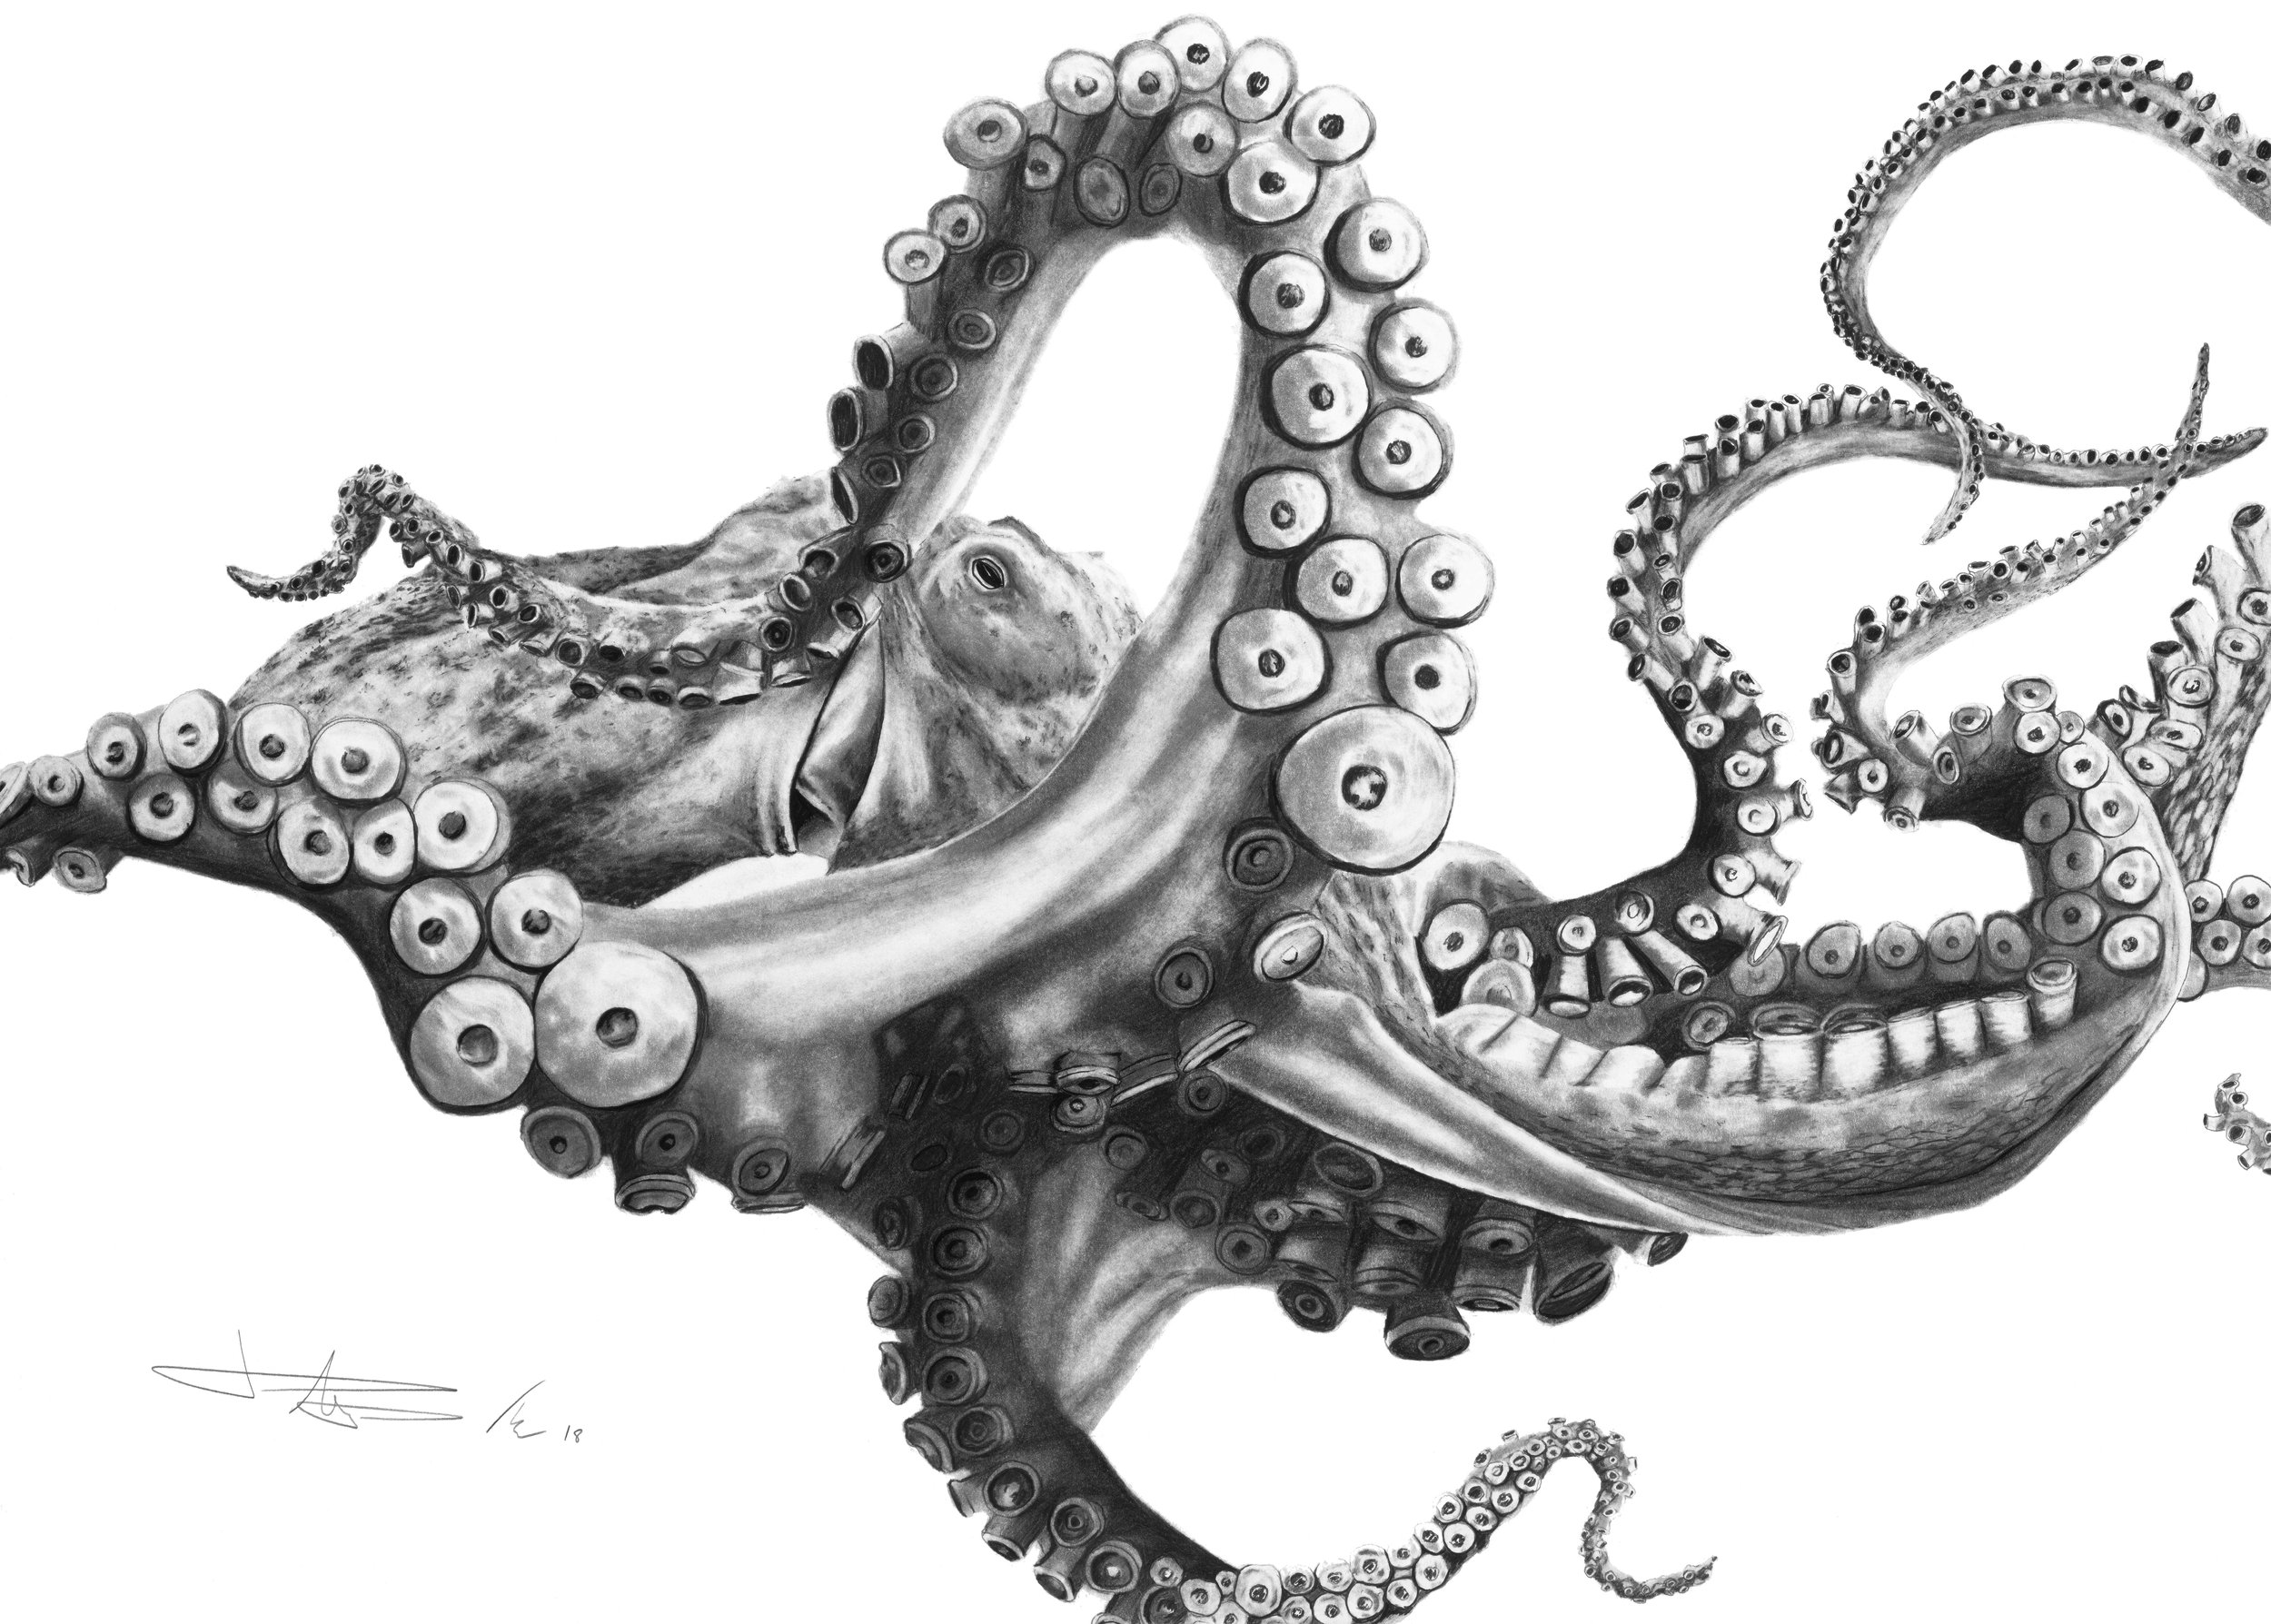 Octopus_5x7.jpg